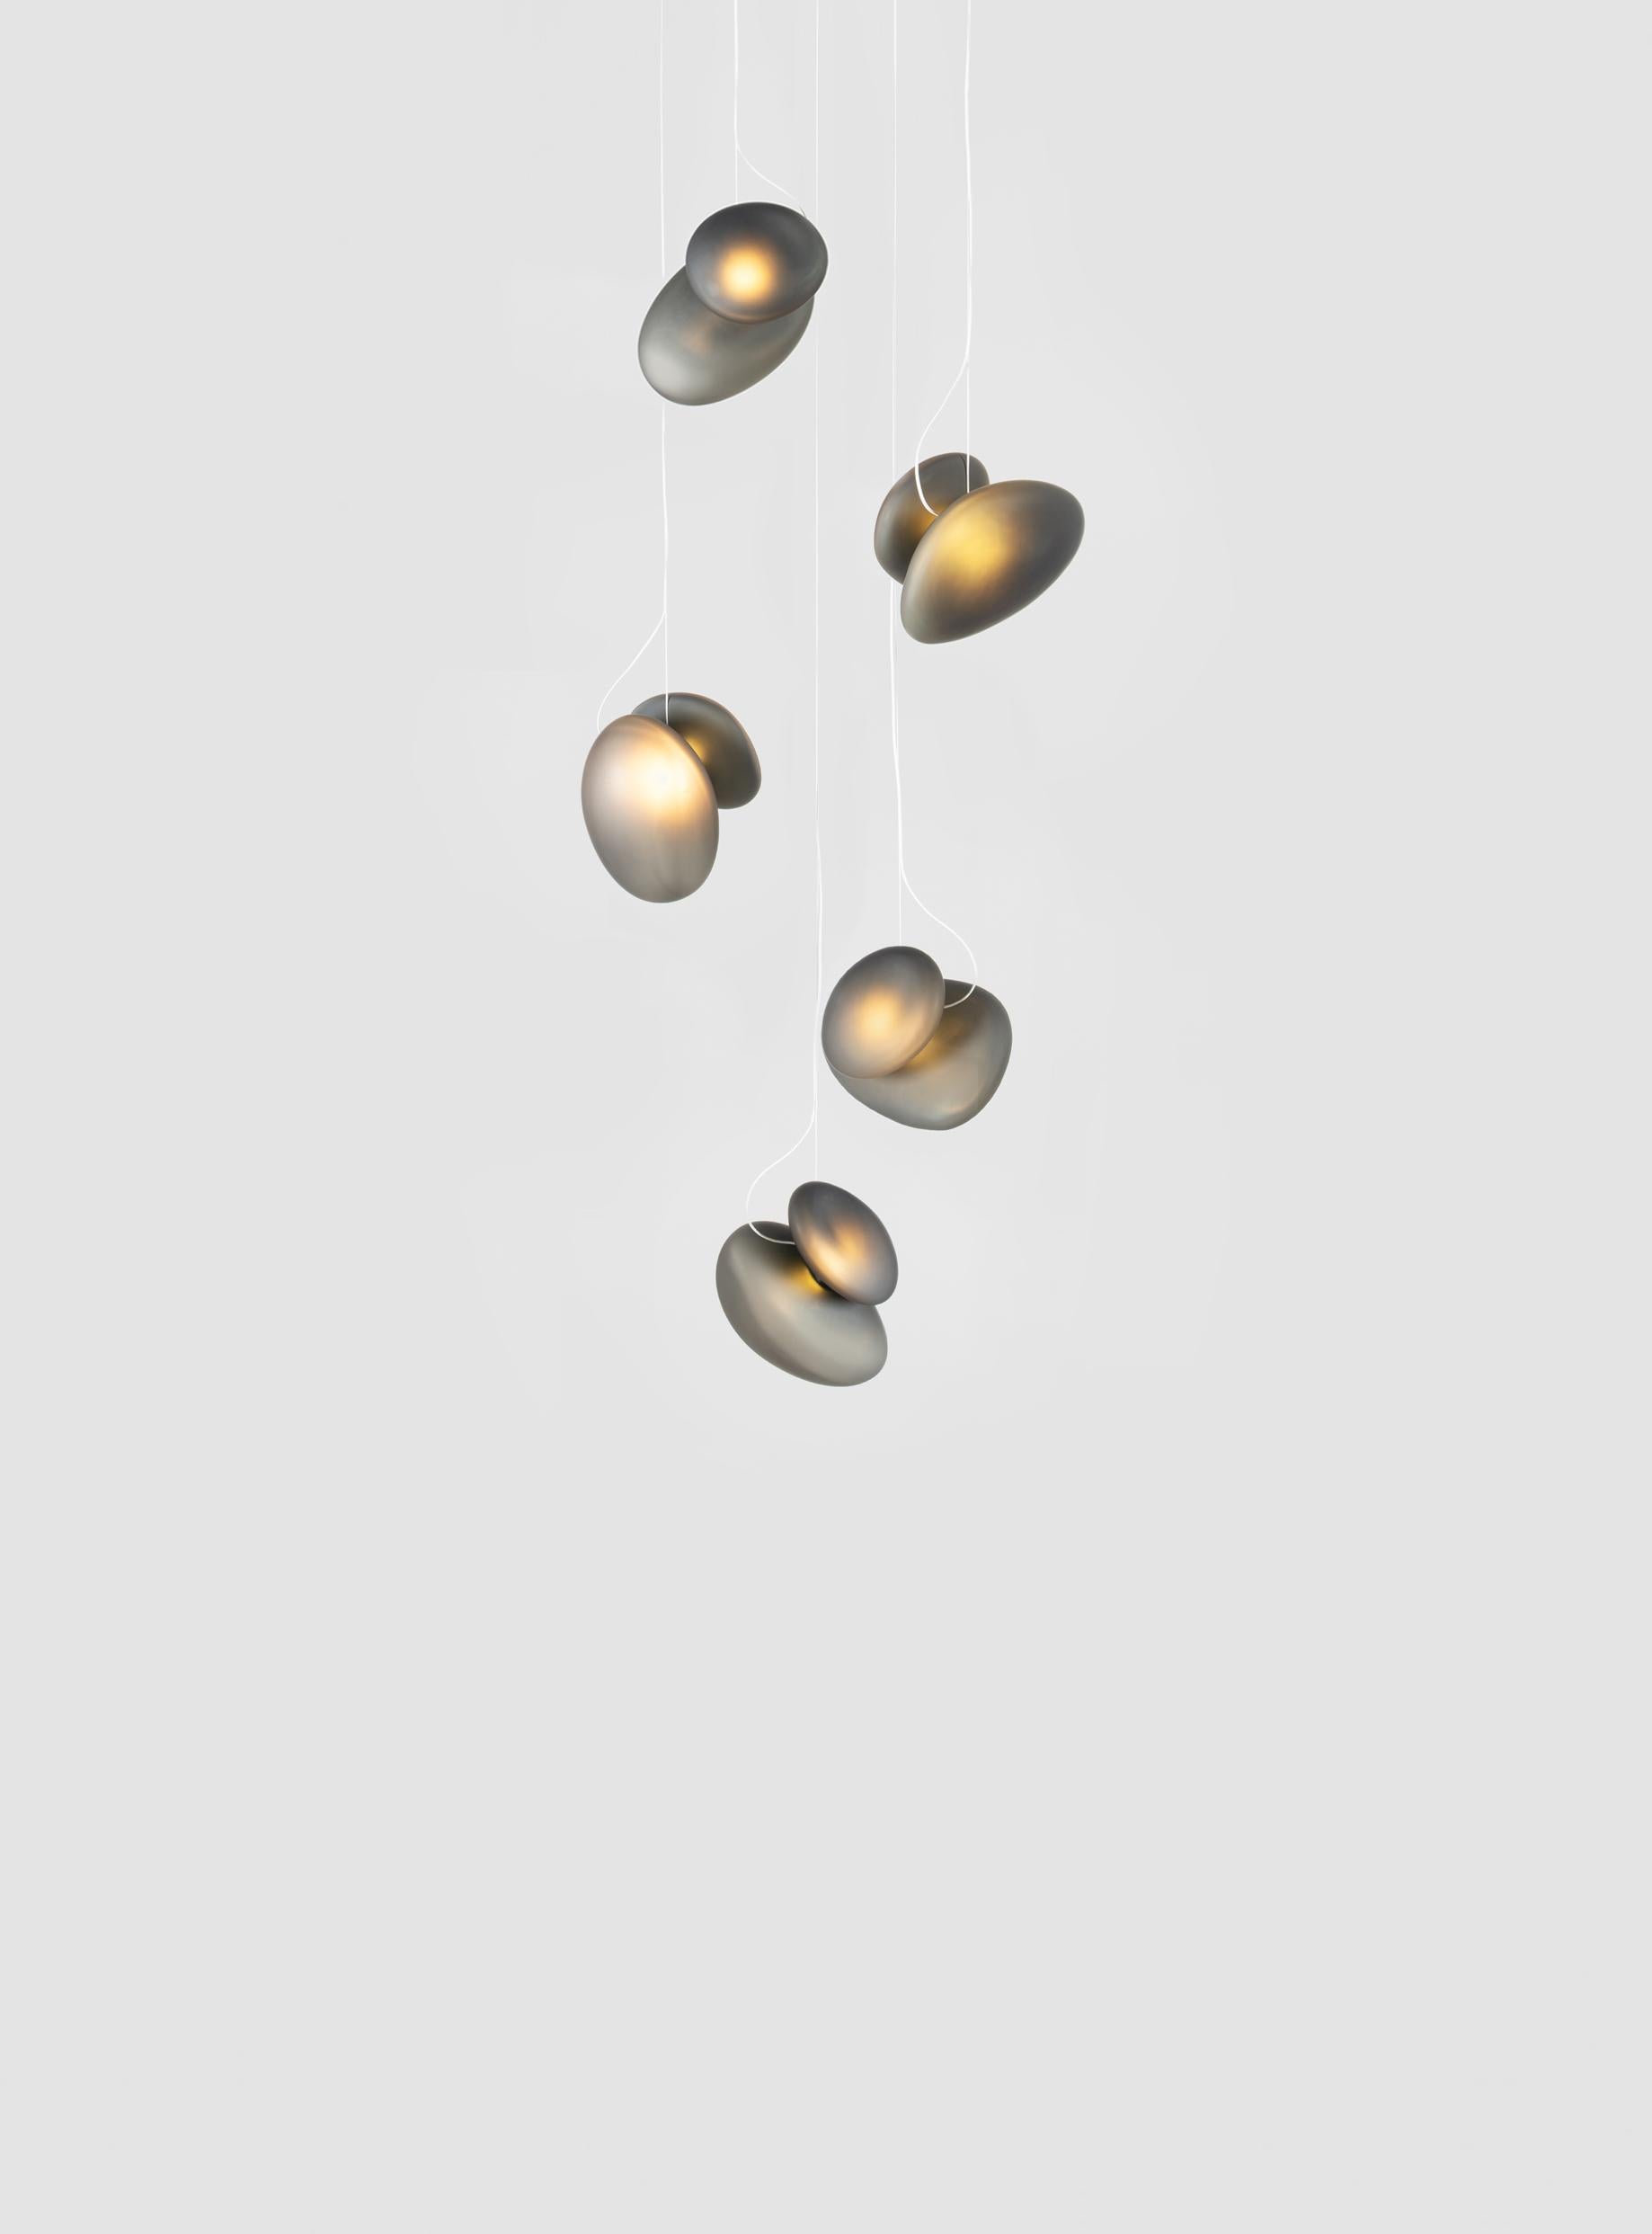 Contemporary chandelier Pebble 
Drop type: Cluster 

Electrical : 
Voltage: 110 – 277V / 220 – 240V
Integral LED source : 3 x 14W LED 39V

The model shown in picture:
Each pendant: Ø 35cm, 5kg
Canopy: Ø 69cm, 11kg
Color: Gray Slate